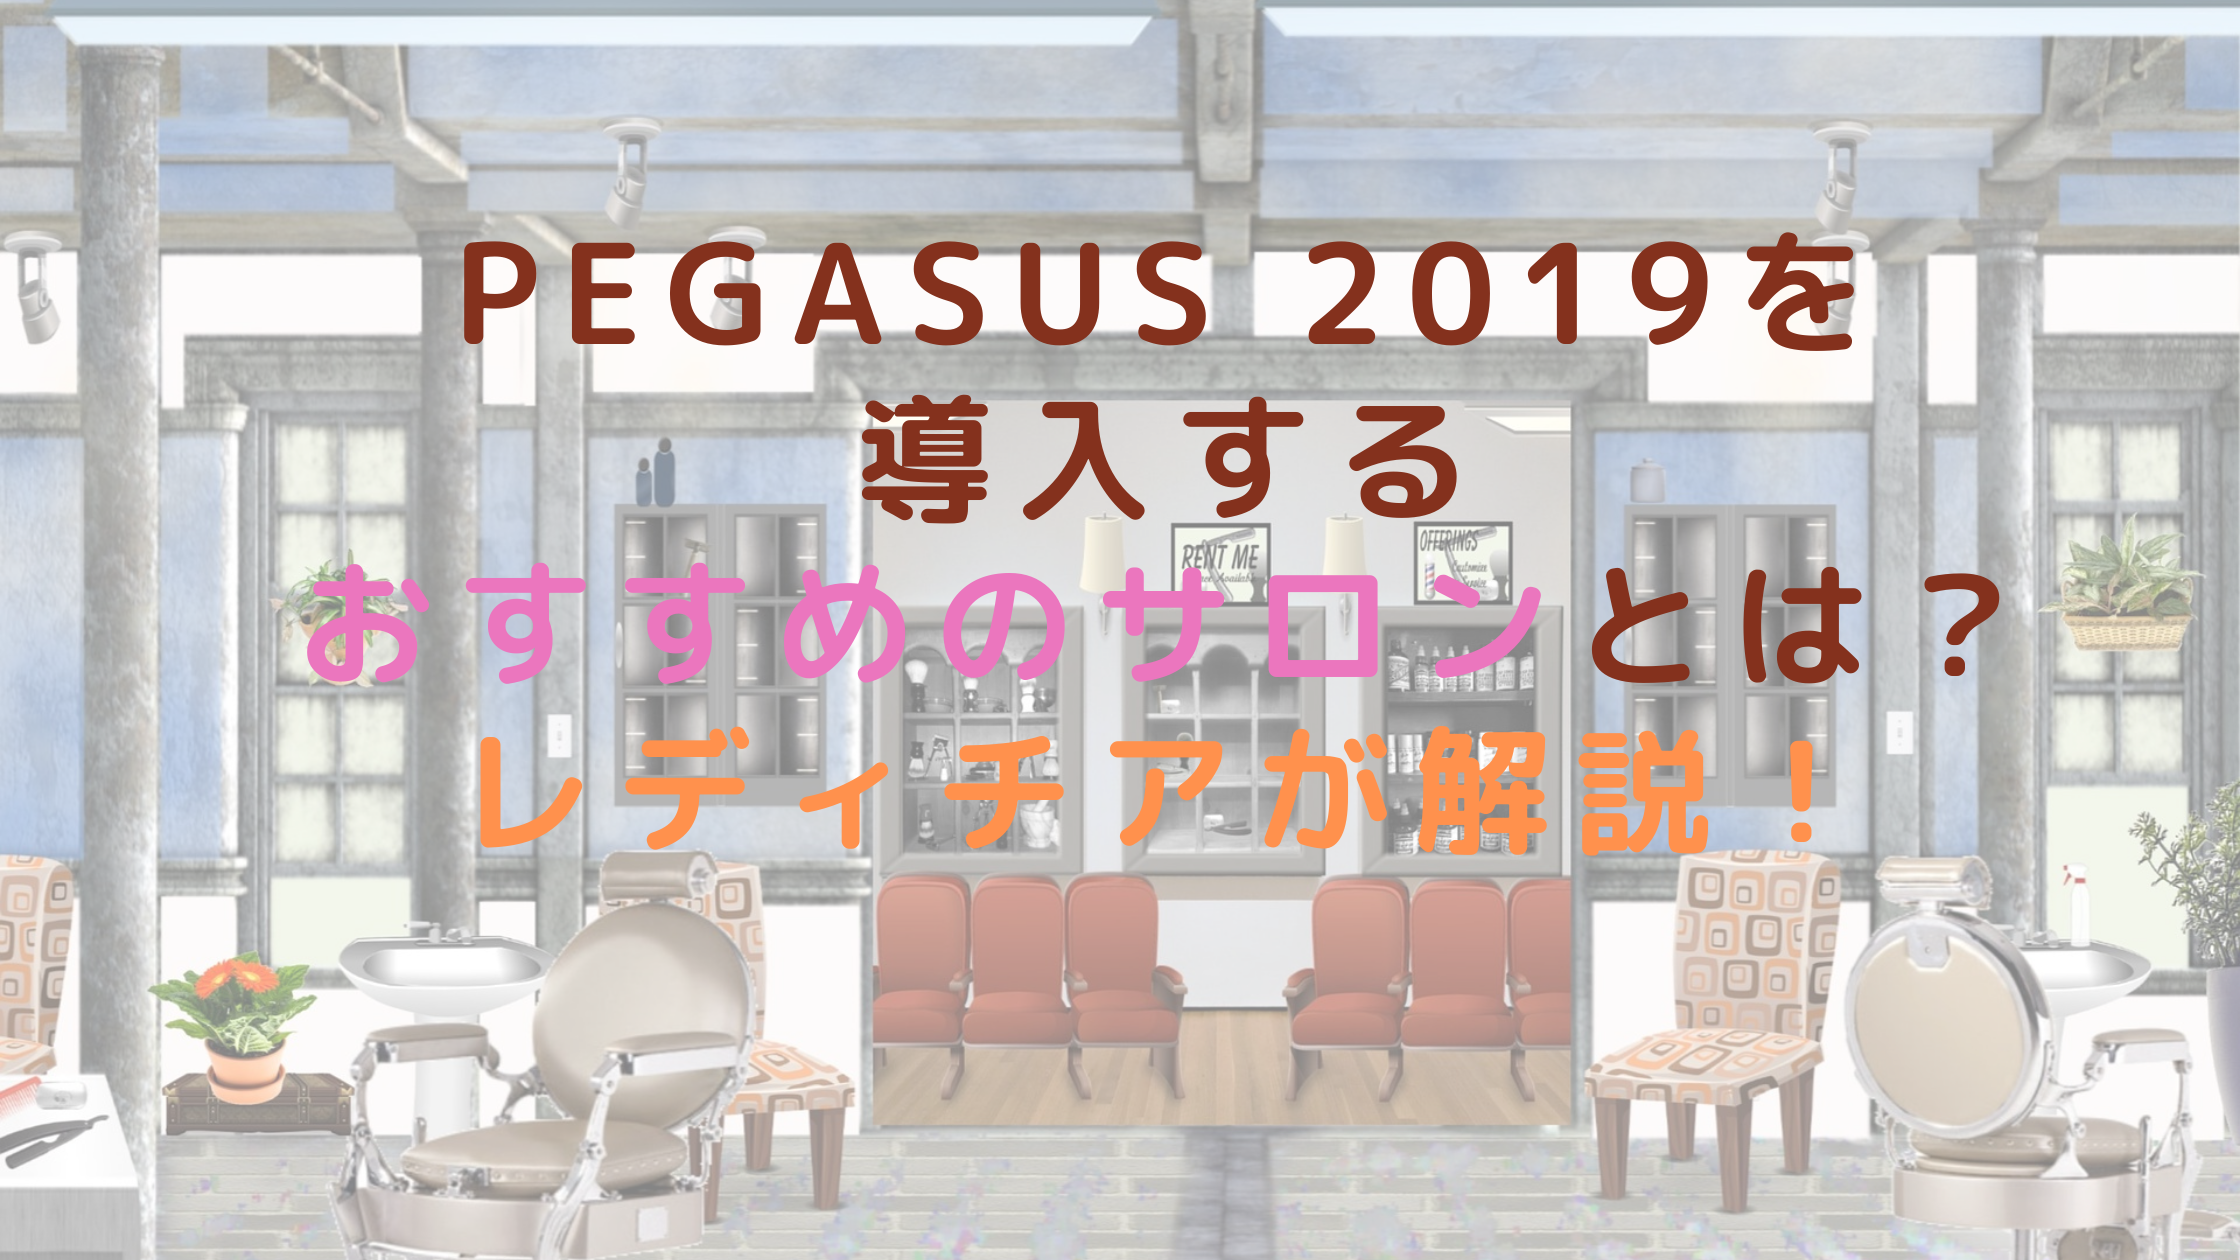 PEGASUS 2019を導入するおすすめのサロンとは？レディチアが解説！